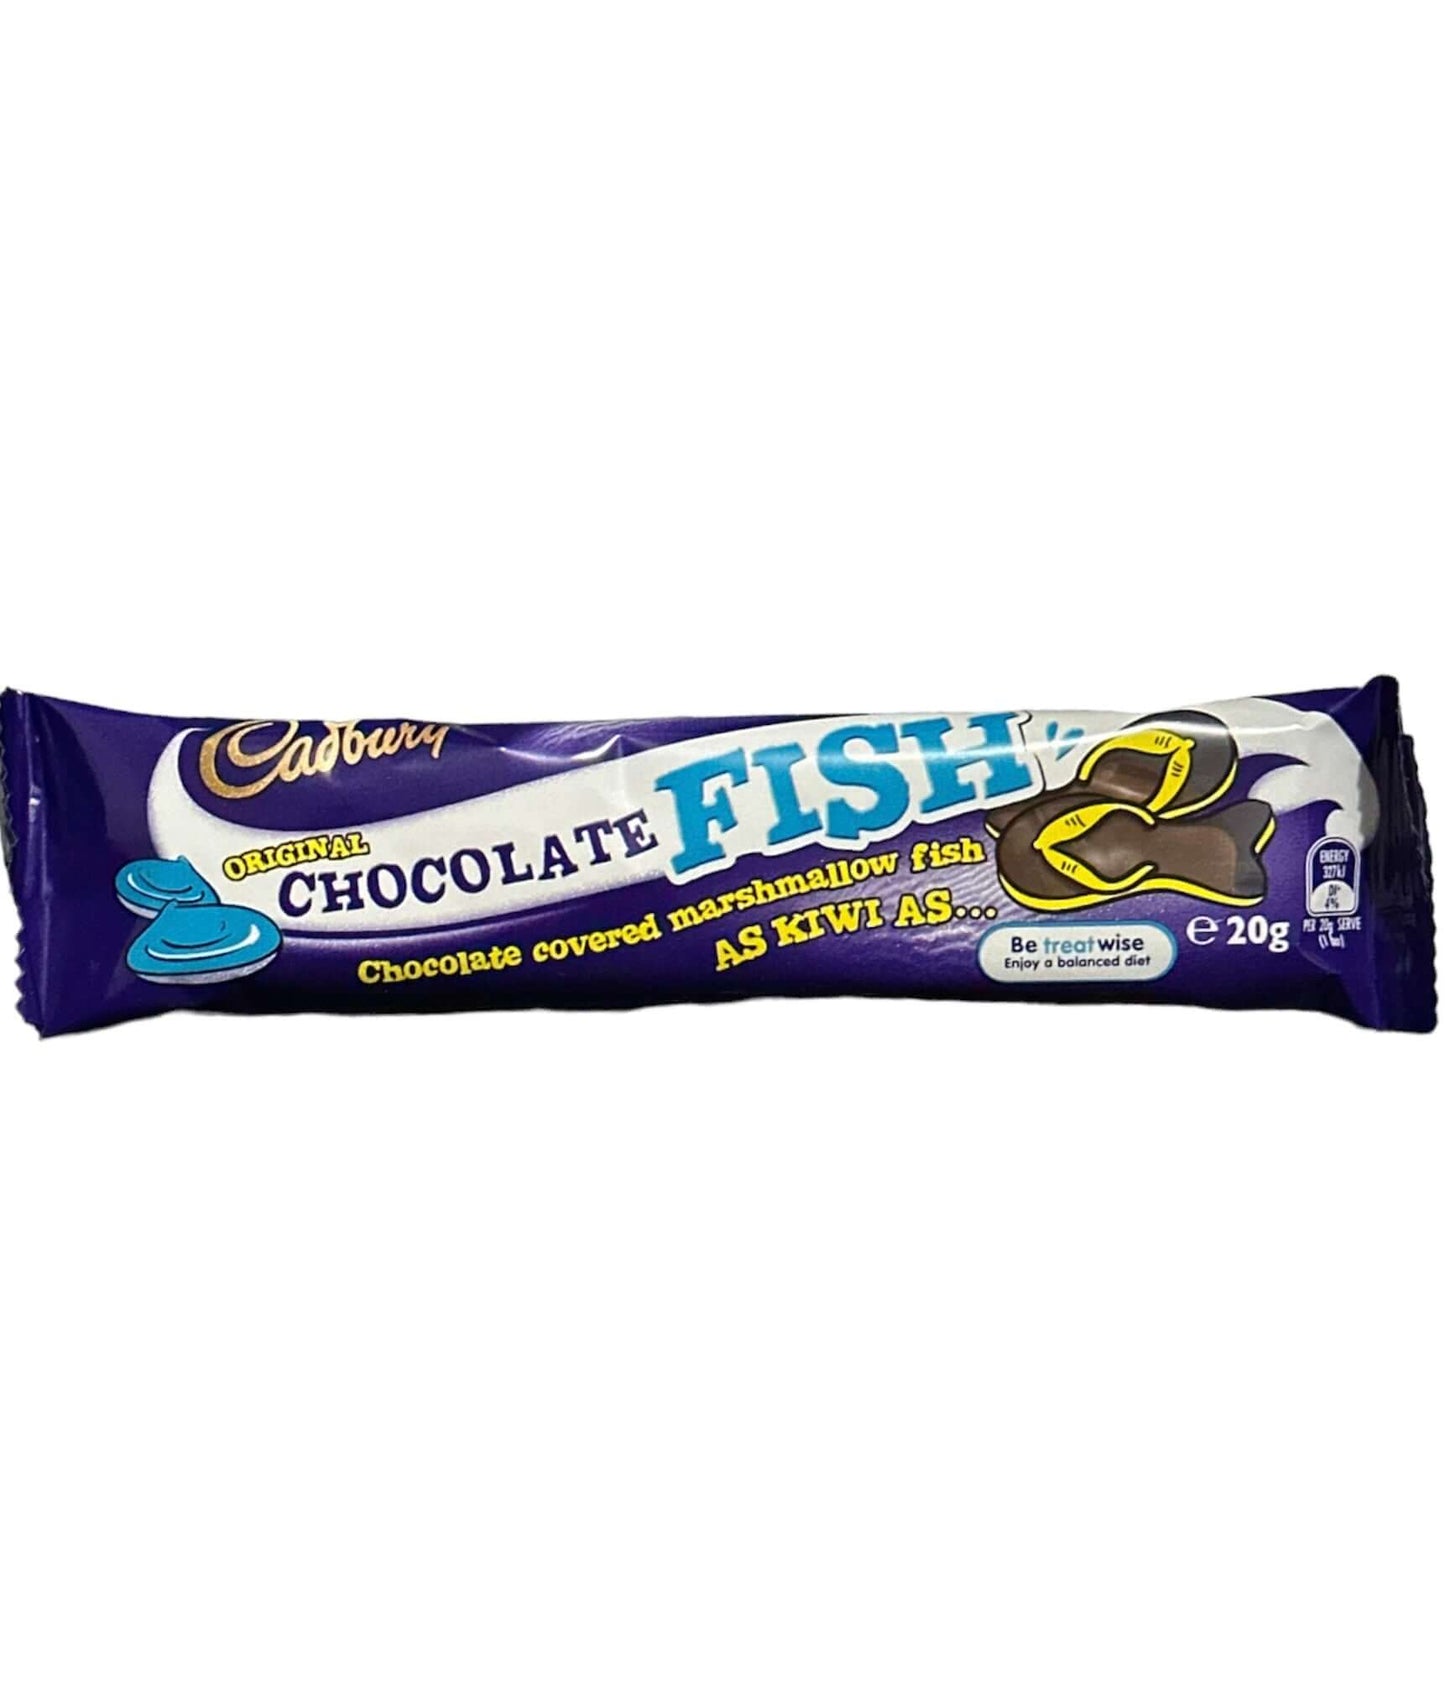 Nz Cadbury chocolate fish